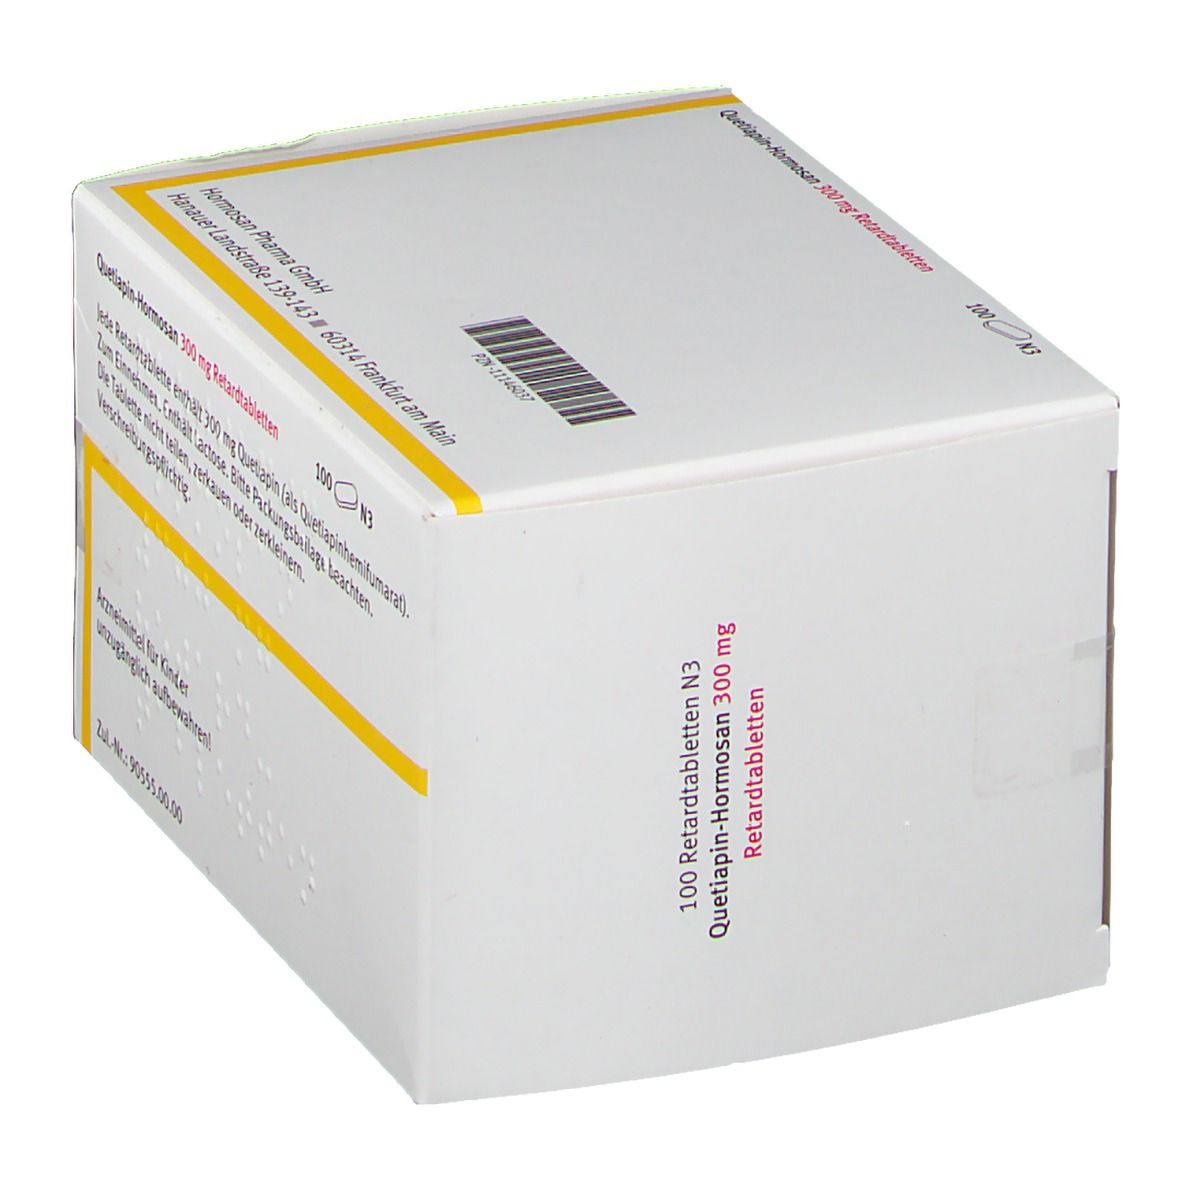 Quetiapin-Hormosan 300 mg